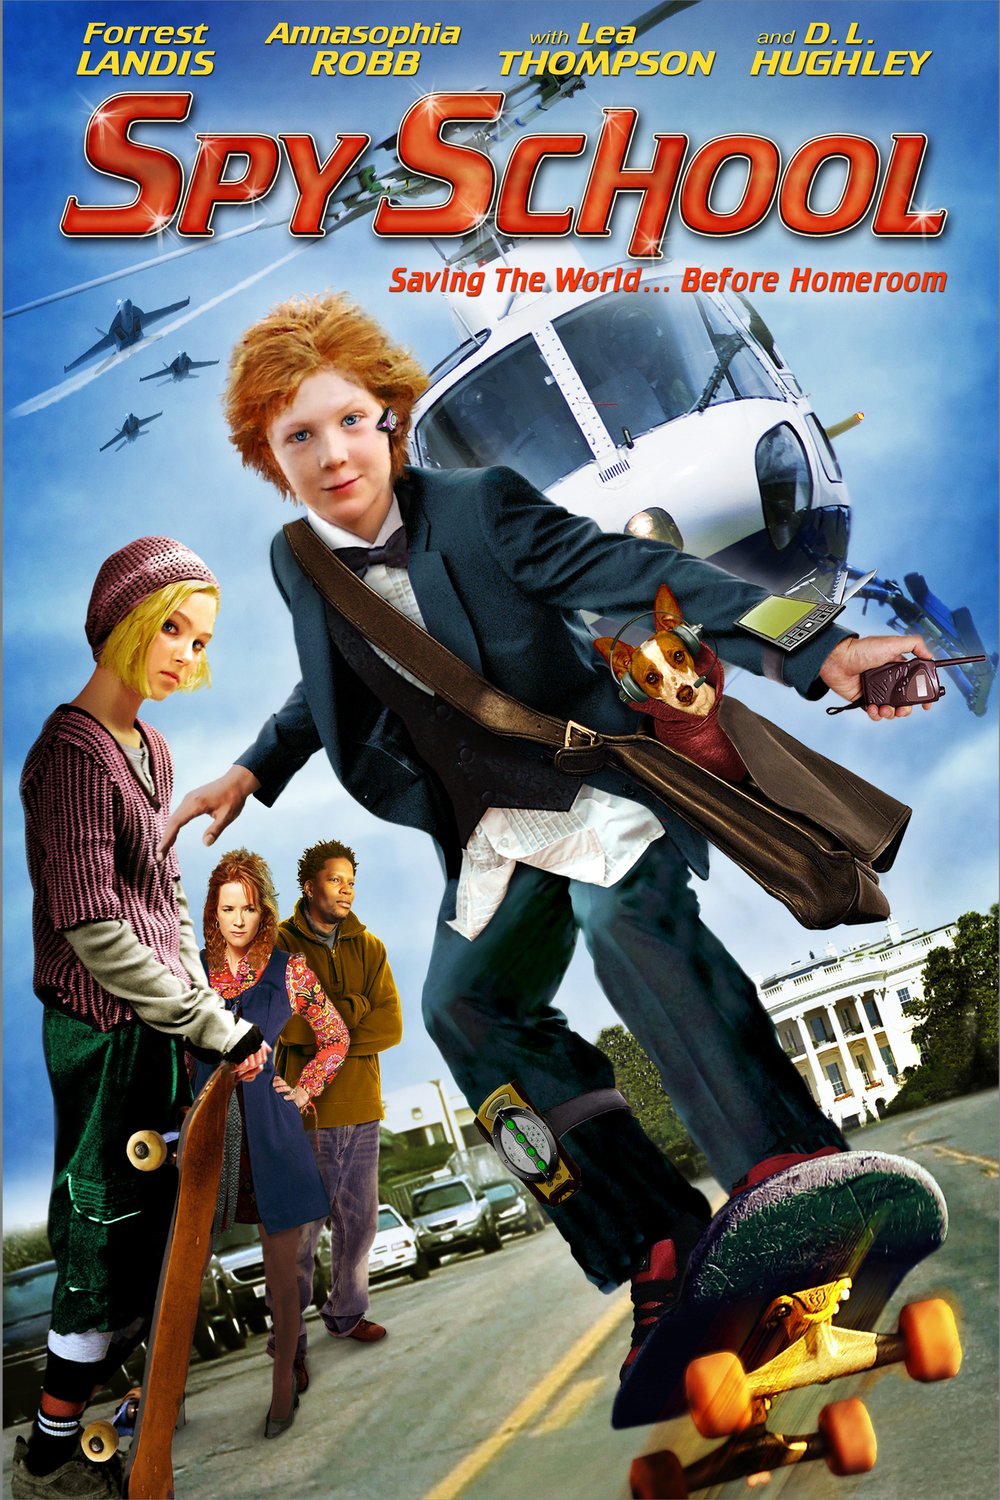 Poster of the movie Spy School